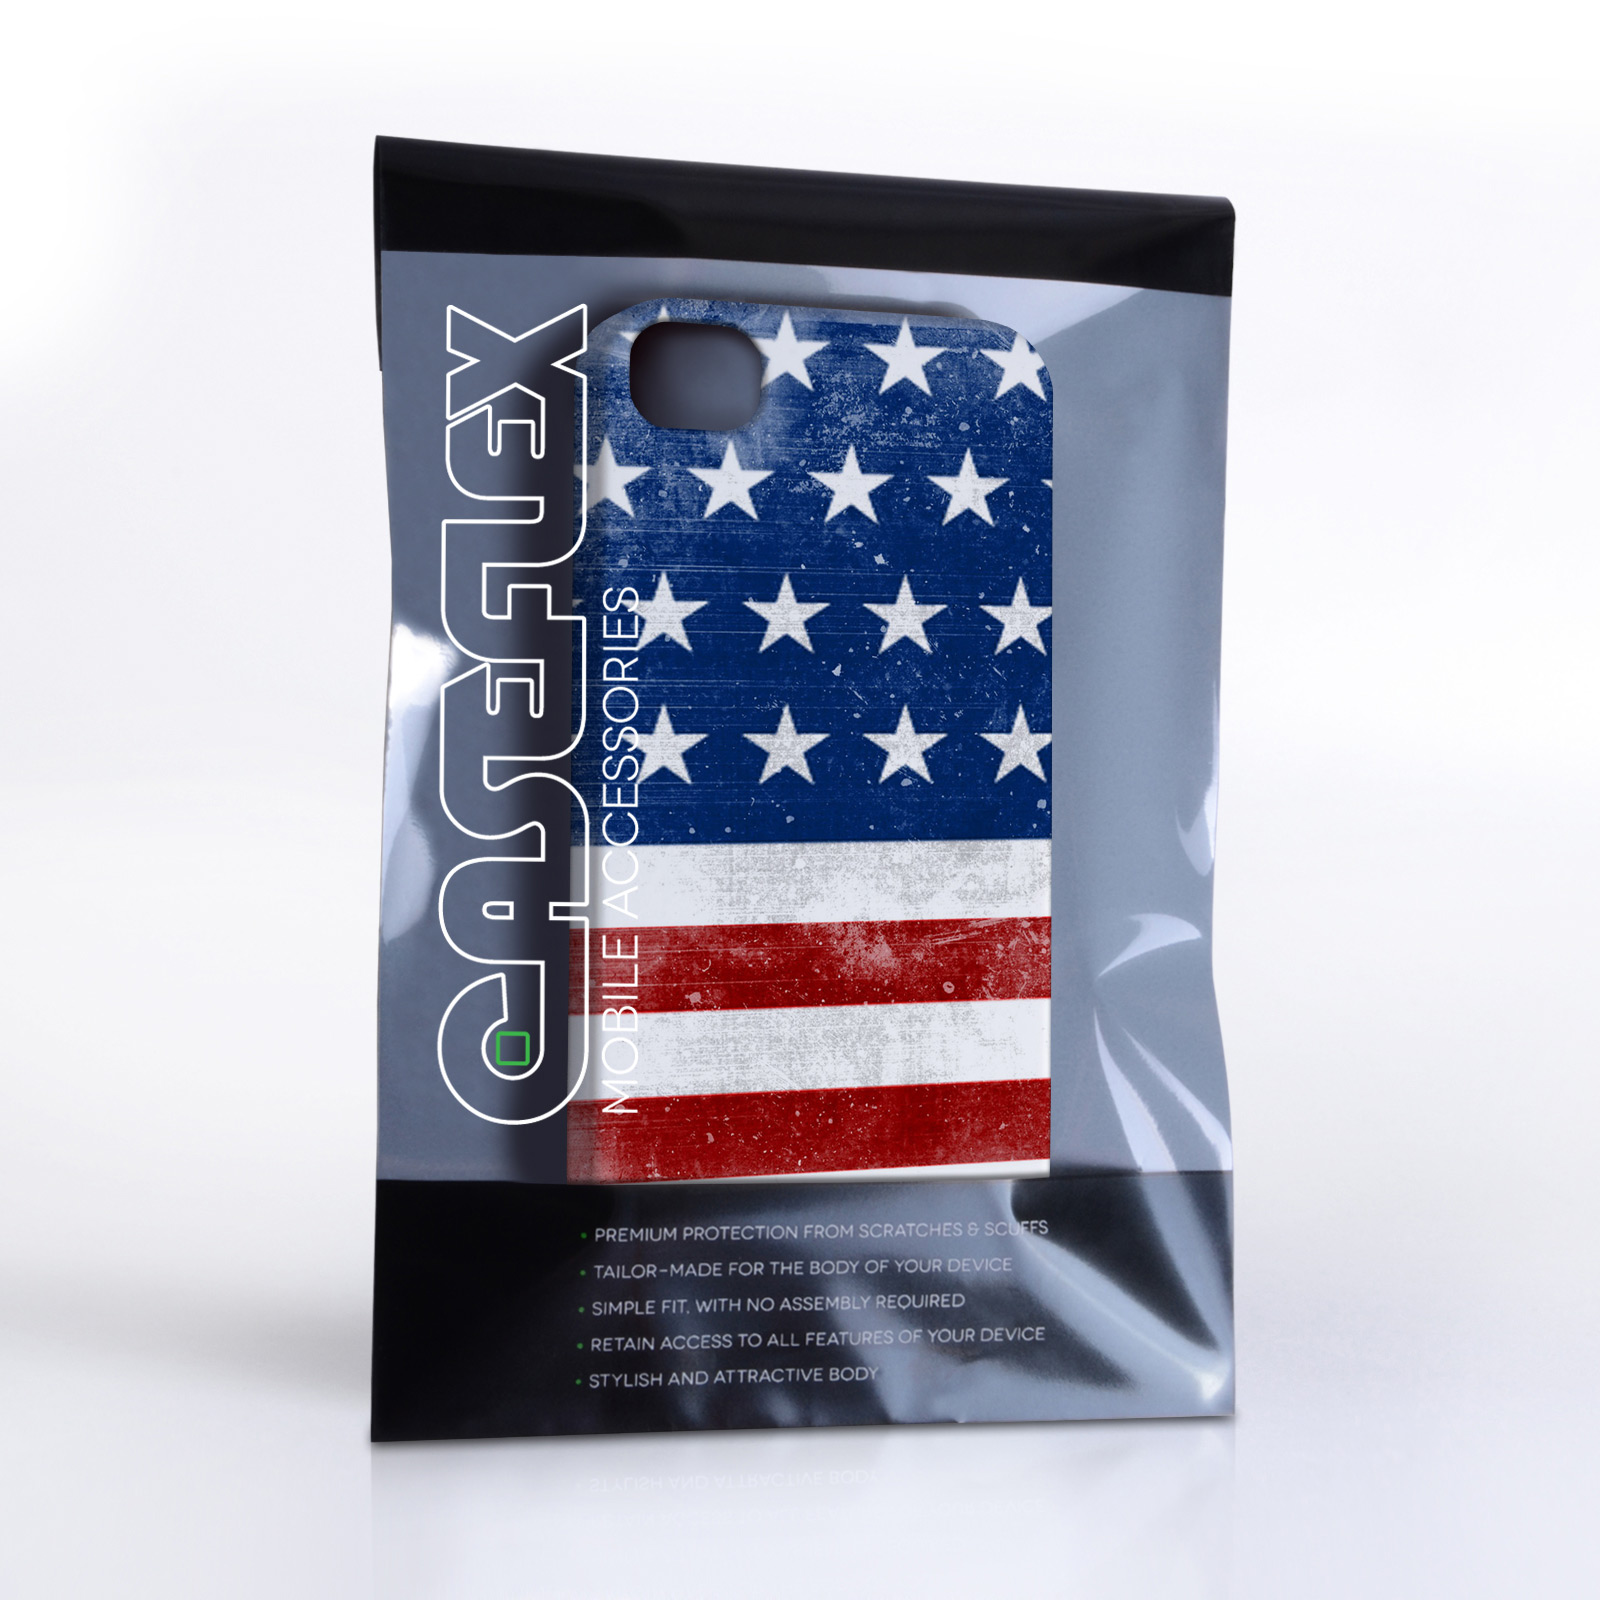 Caseflex iPhone 4 / 4S Retro USA Flag Case